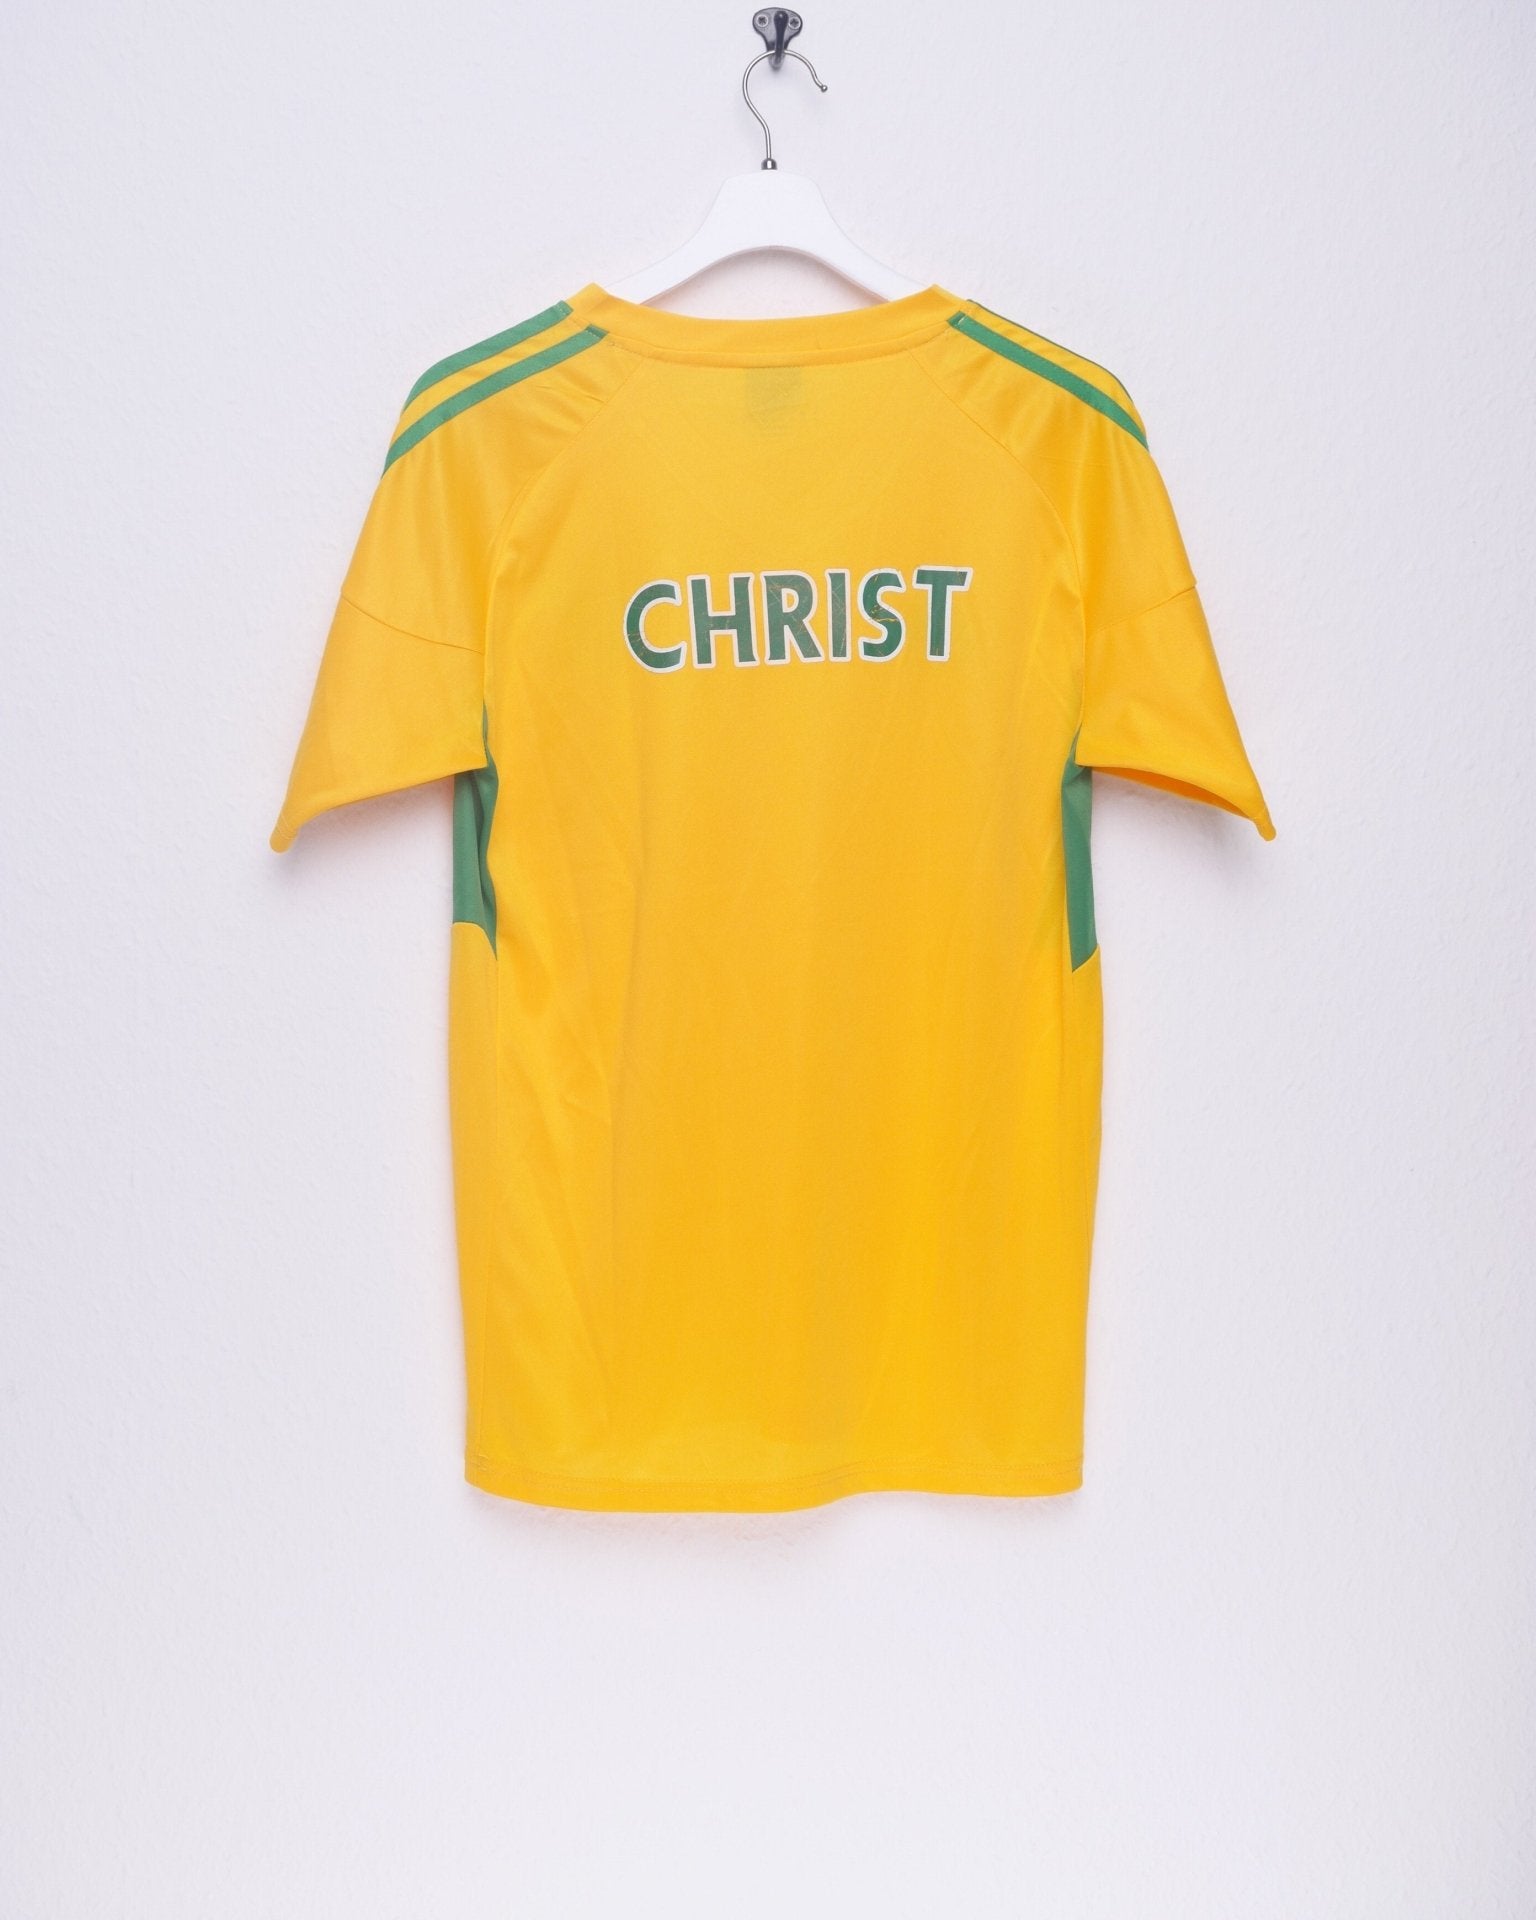 adidas Congo Fecofoot Christ embroidered Logo Jersey Shirt - Peeces